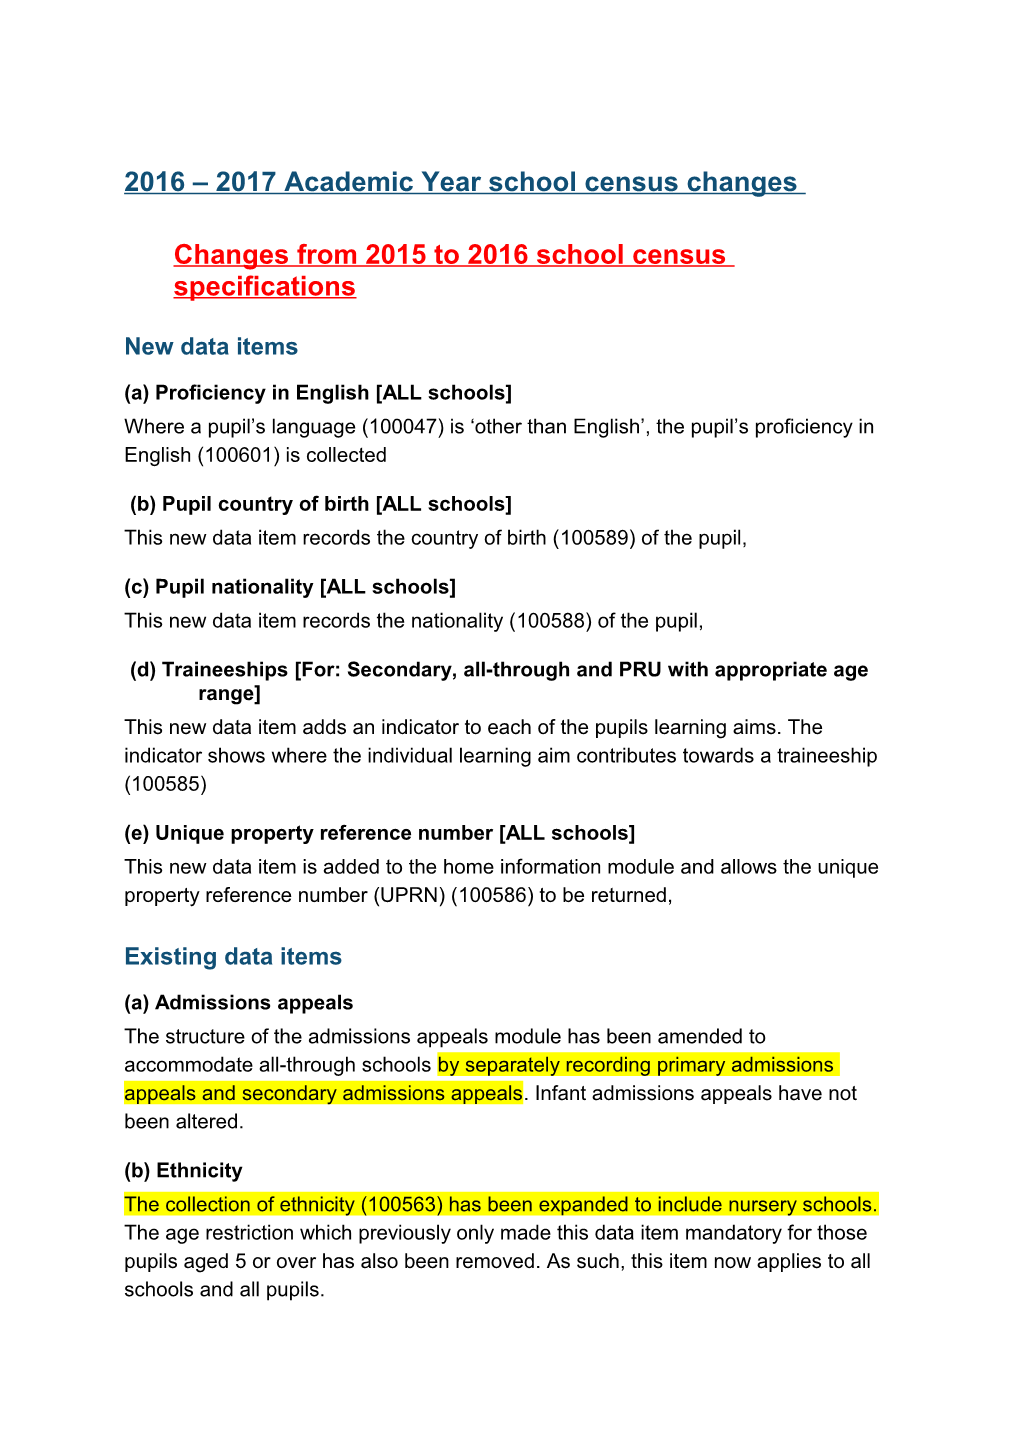 2016 2017 Academic Year School Census Changes